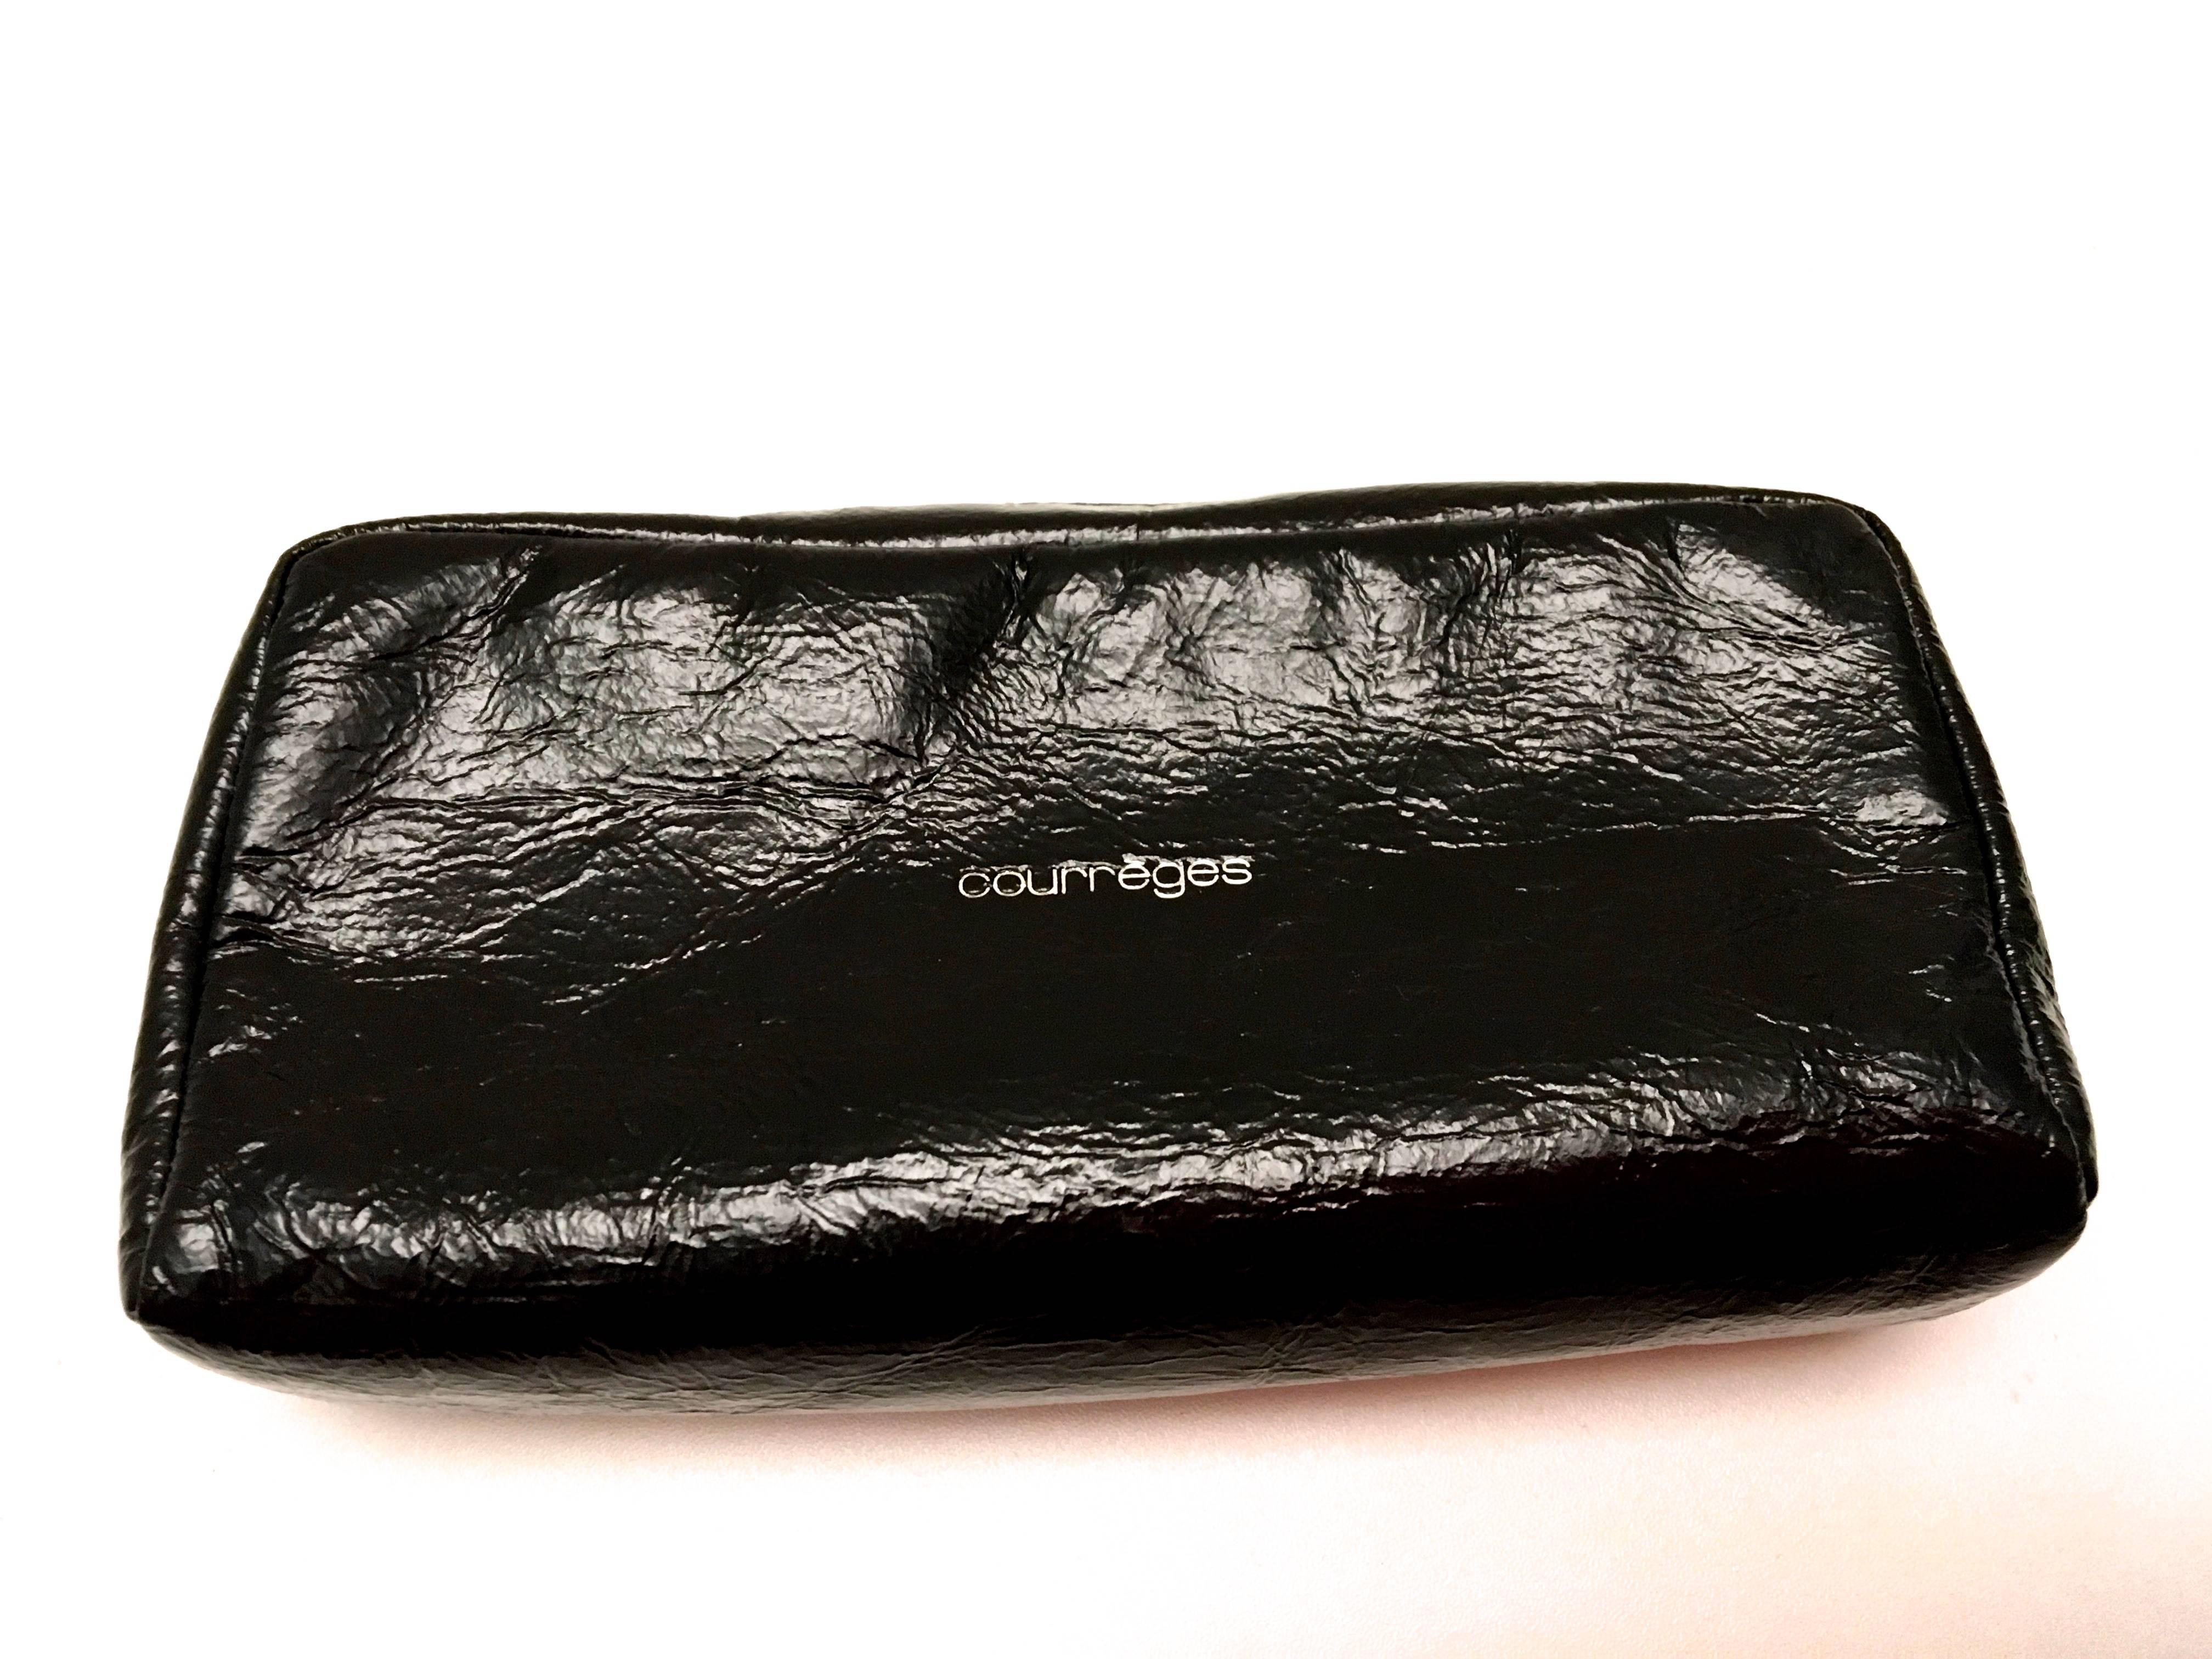 Women's Courreges Bag - Black - Patent Leather - Makeup / Accessory - New For Sale